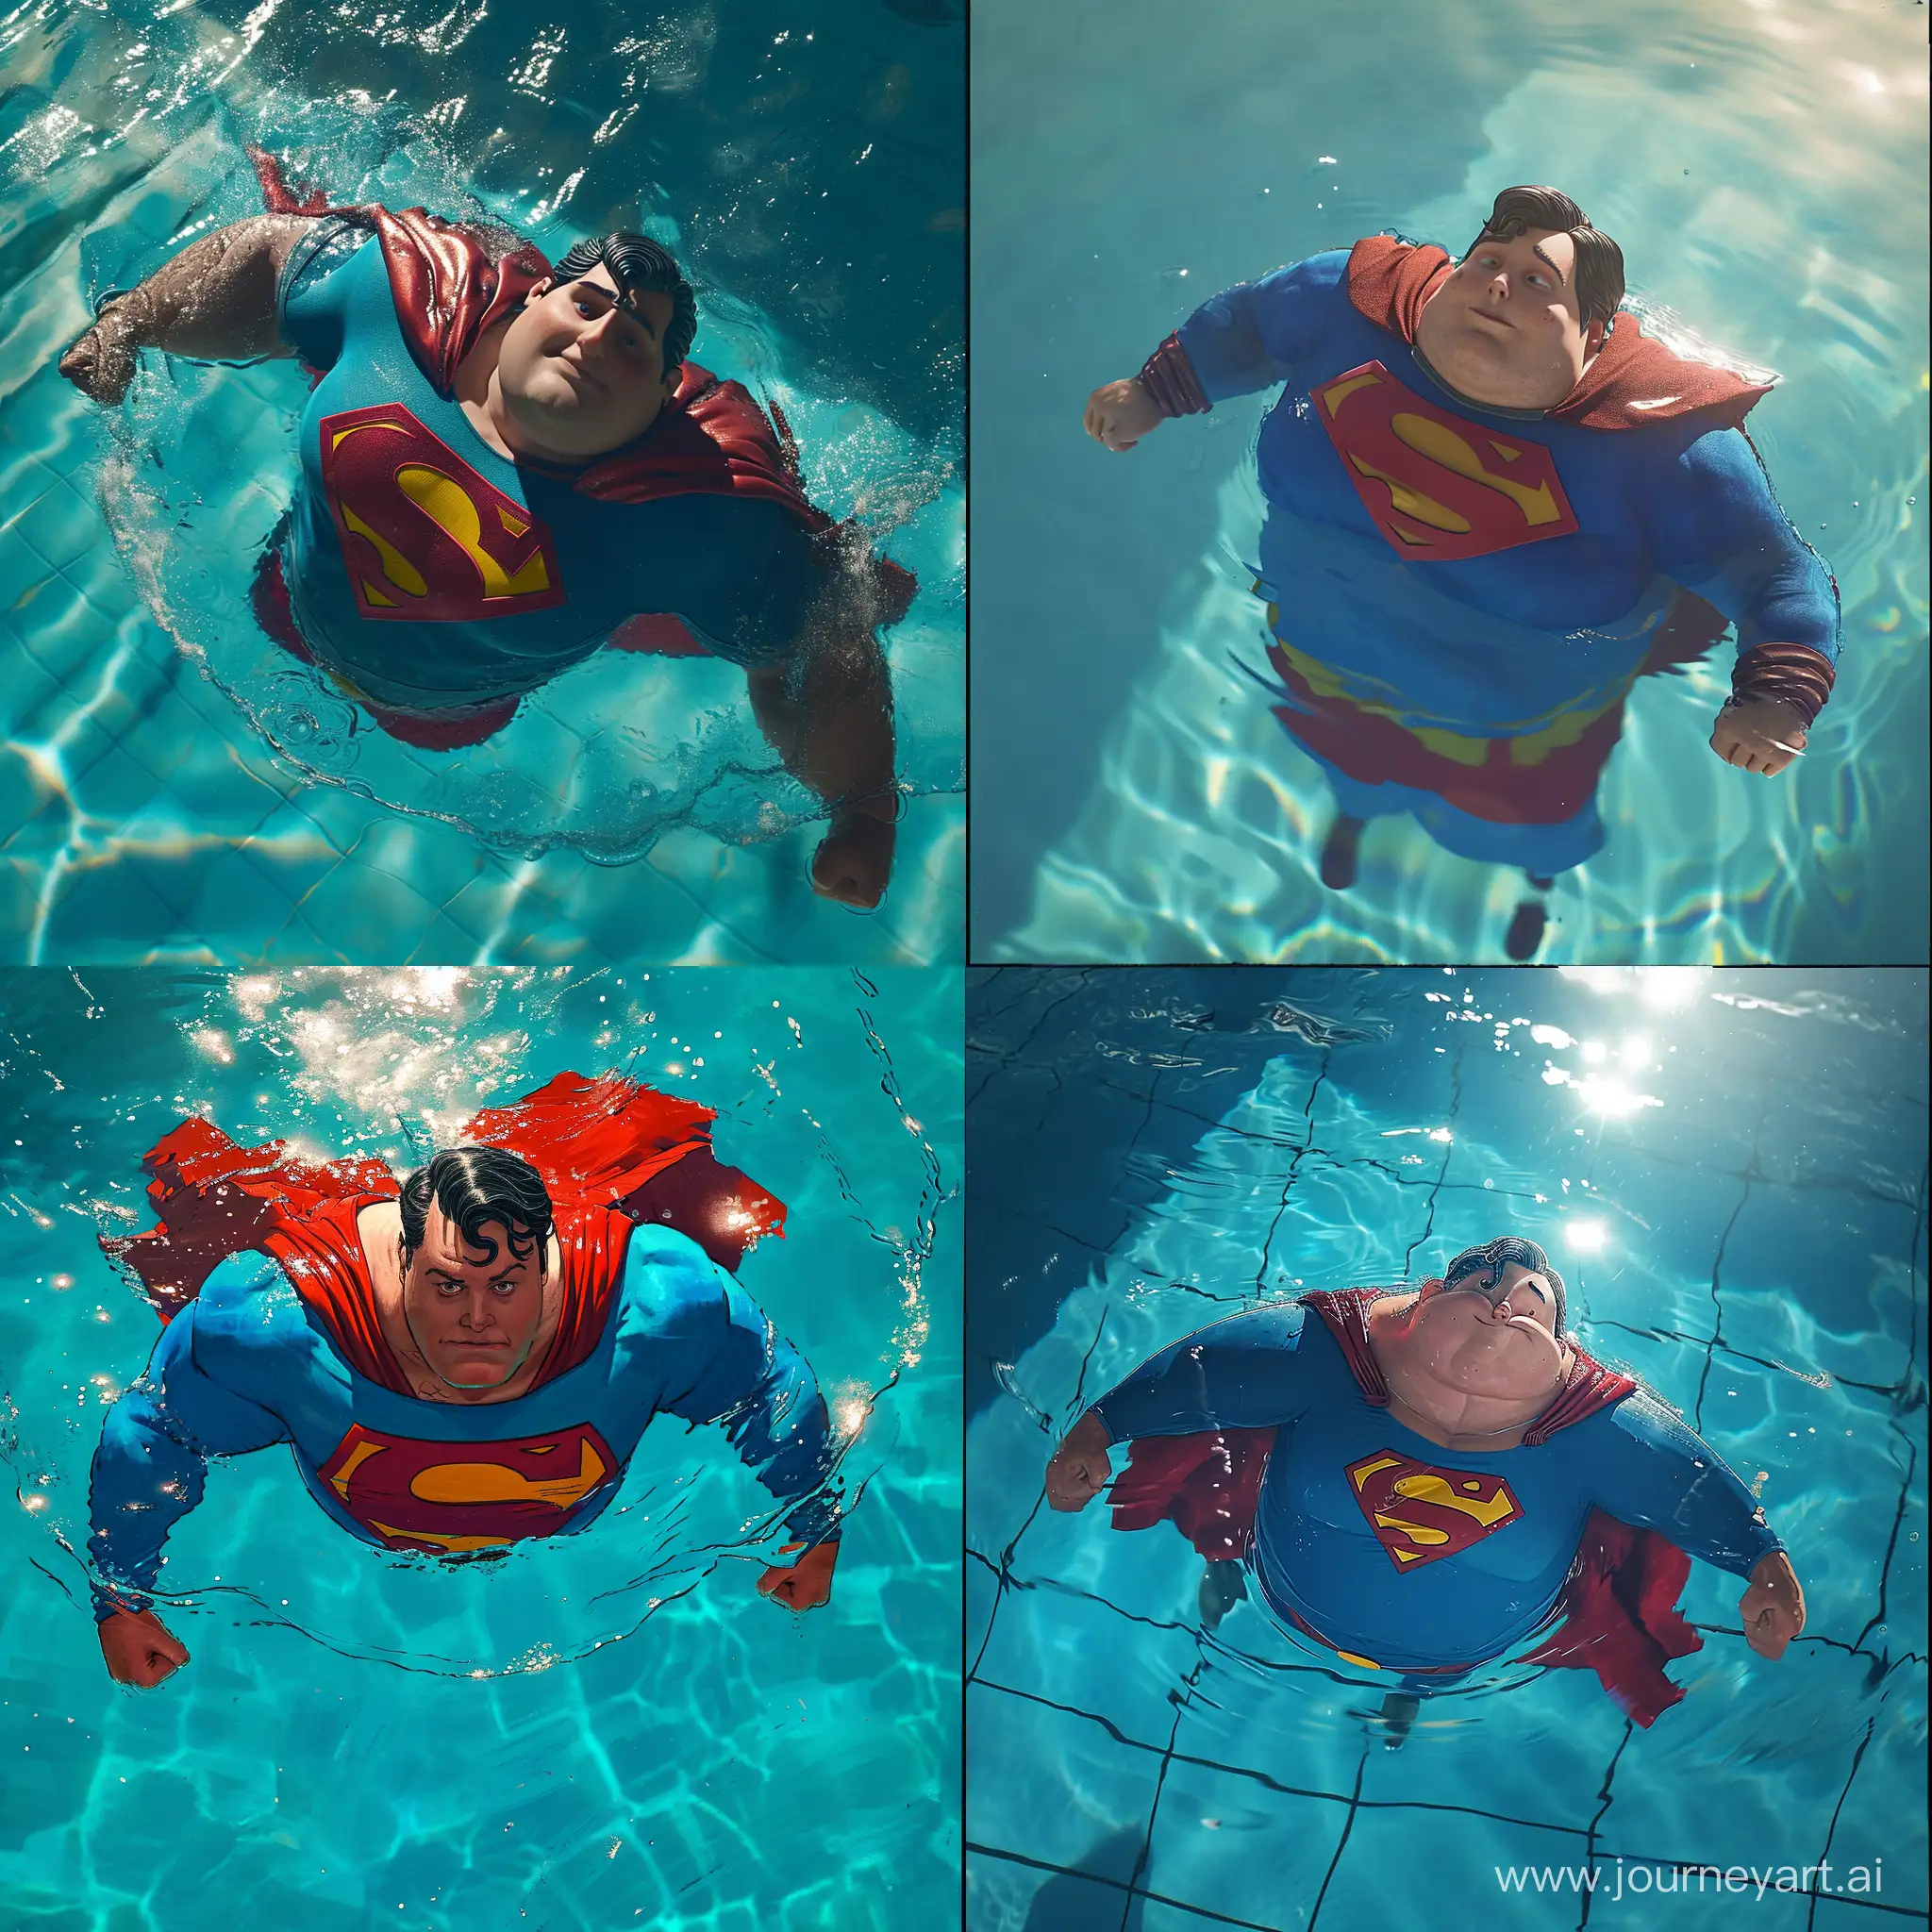 Joyful-Chubby-Superman-Swimming-in-a-Refreshing-Pool